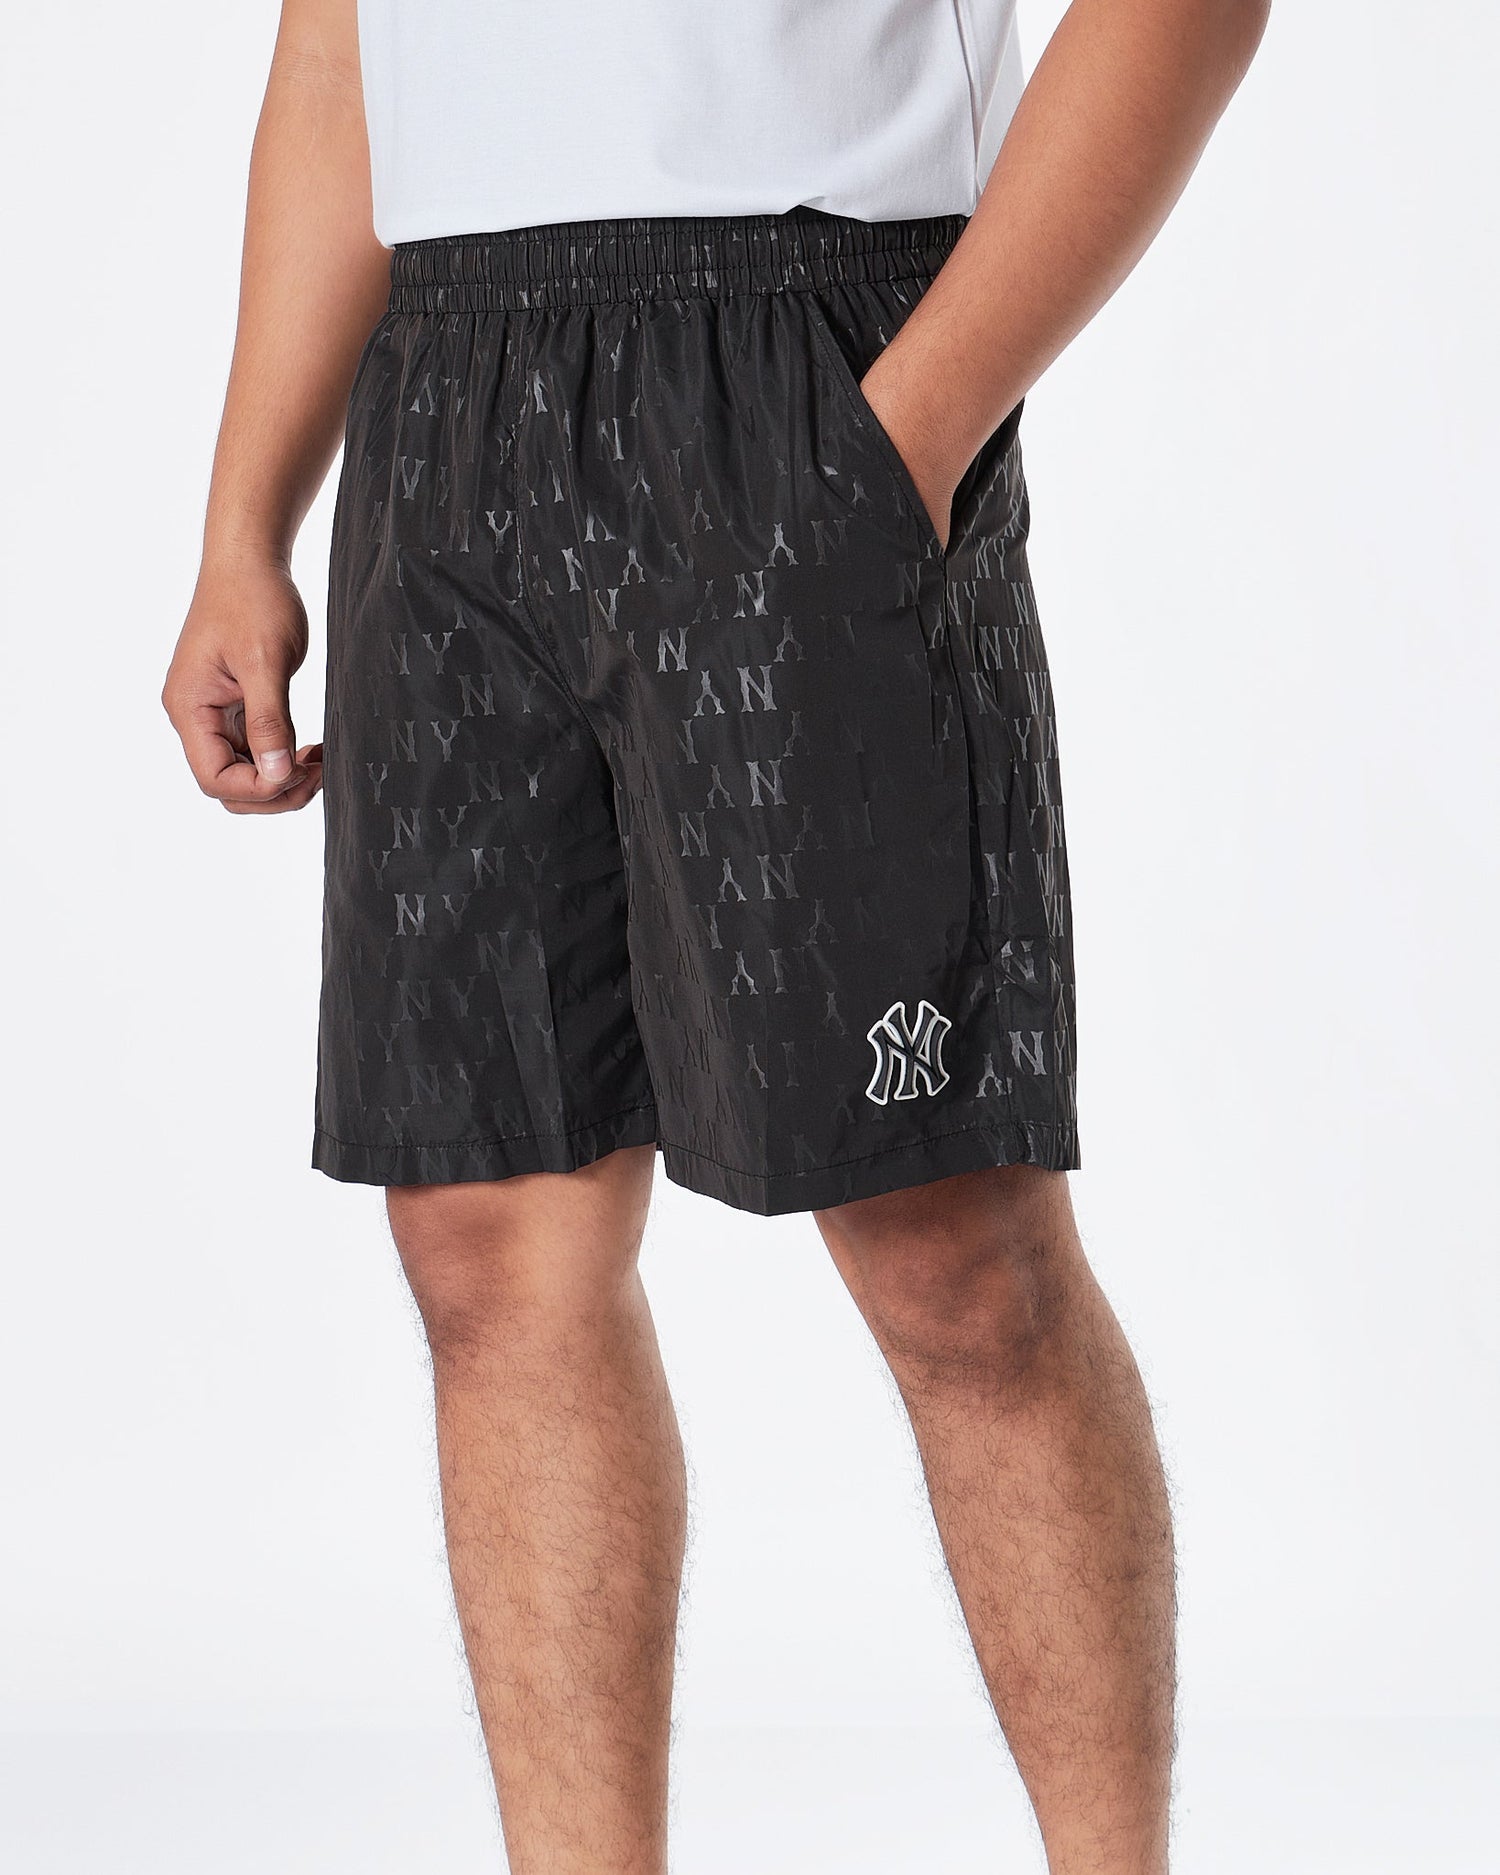 MOI OUTFIT-NY Monogram Men Black Shorts 23.90